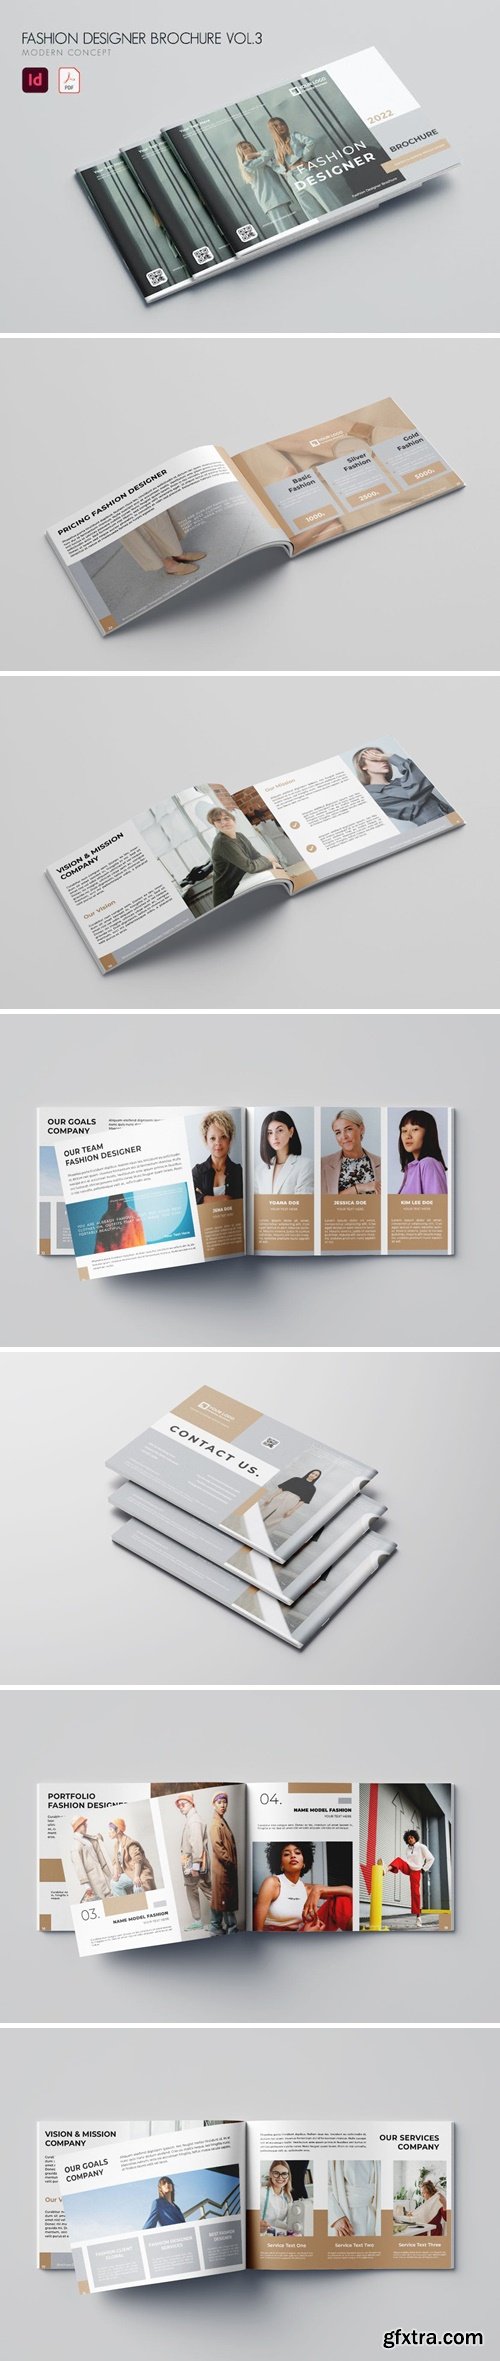 Fashion Designer Brochure Vol.3 QYBAEFQ